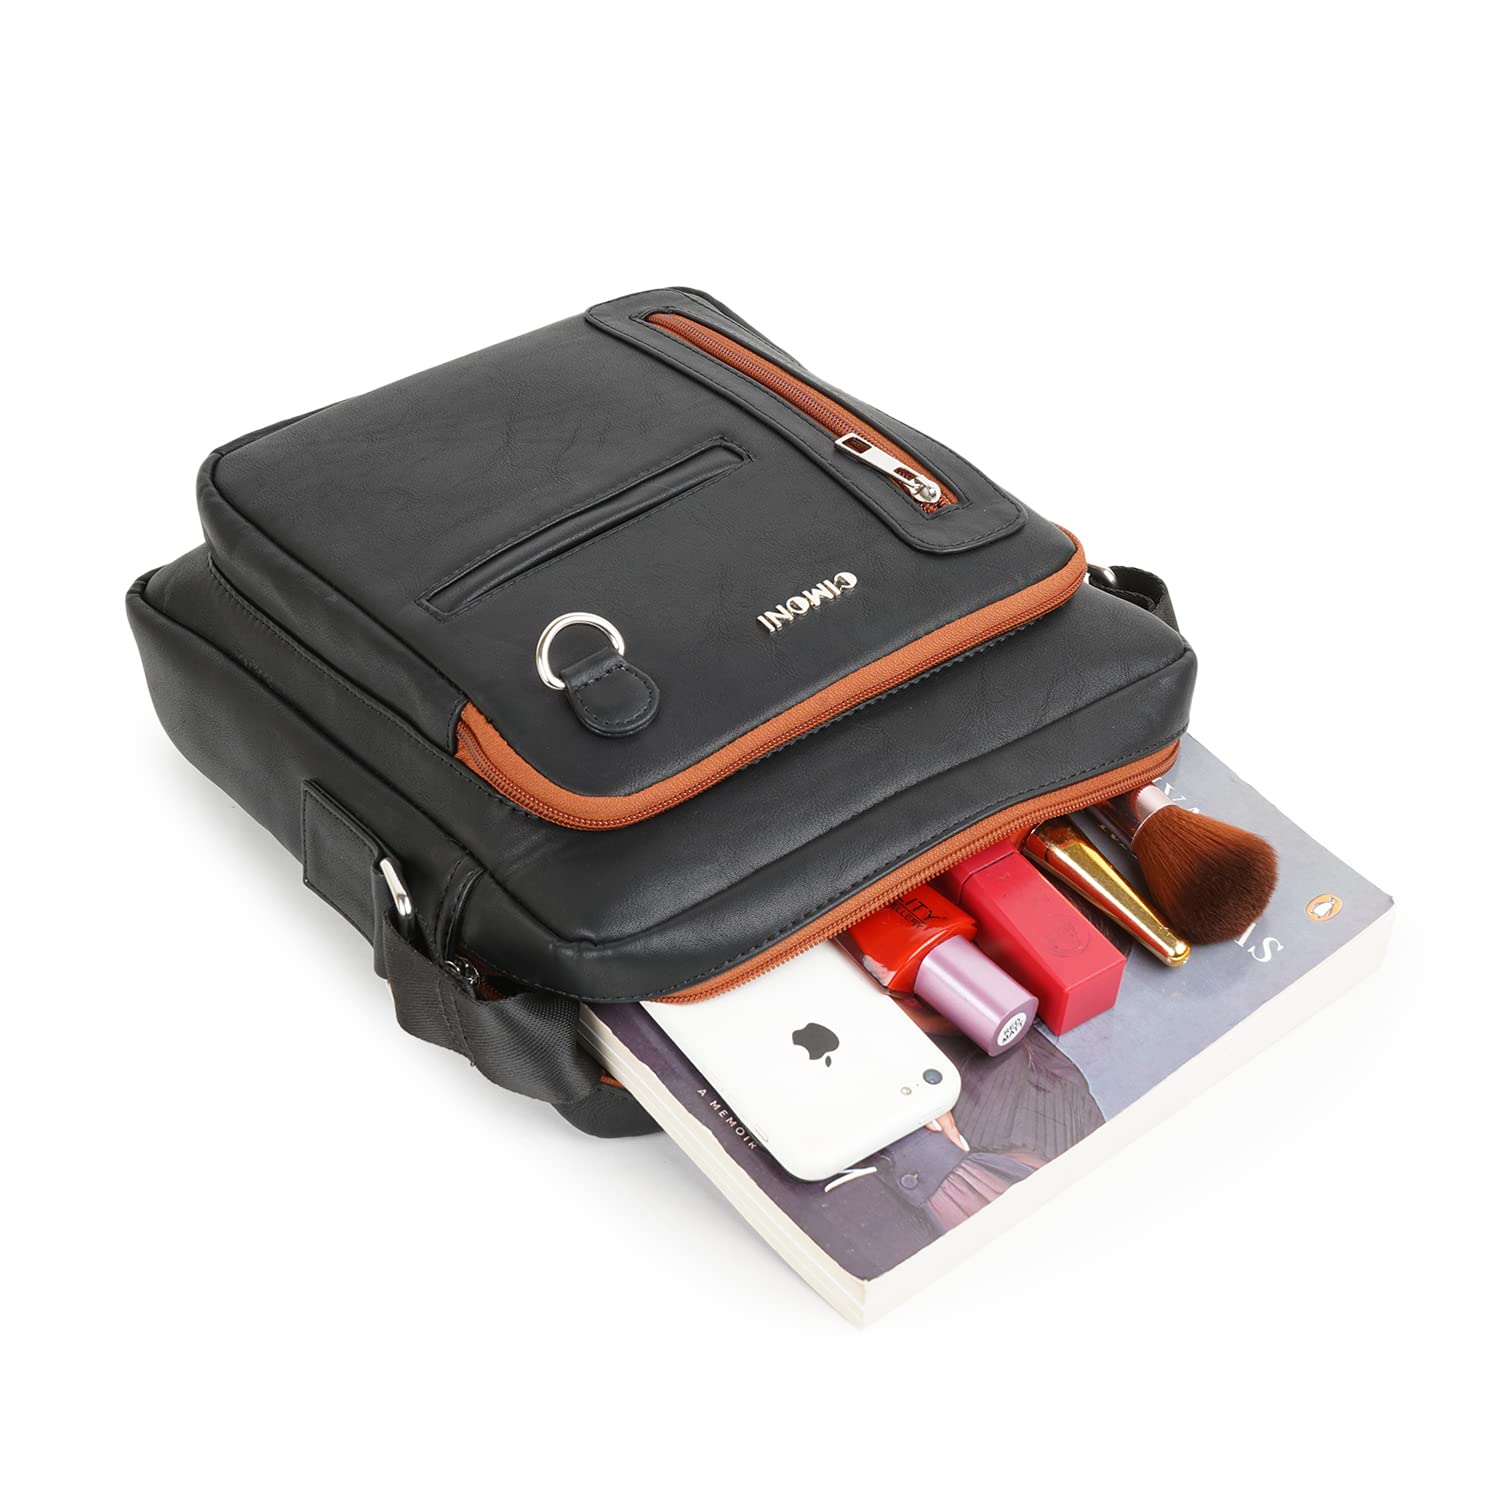 CIMONI® Premium Genuine Leather Bag Classic Design Travel Bag for Office, College & Business With Adjustable Straps Daytrip Crossbody Slingbag